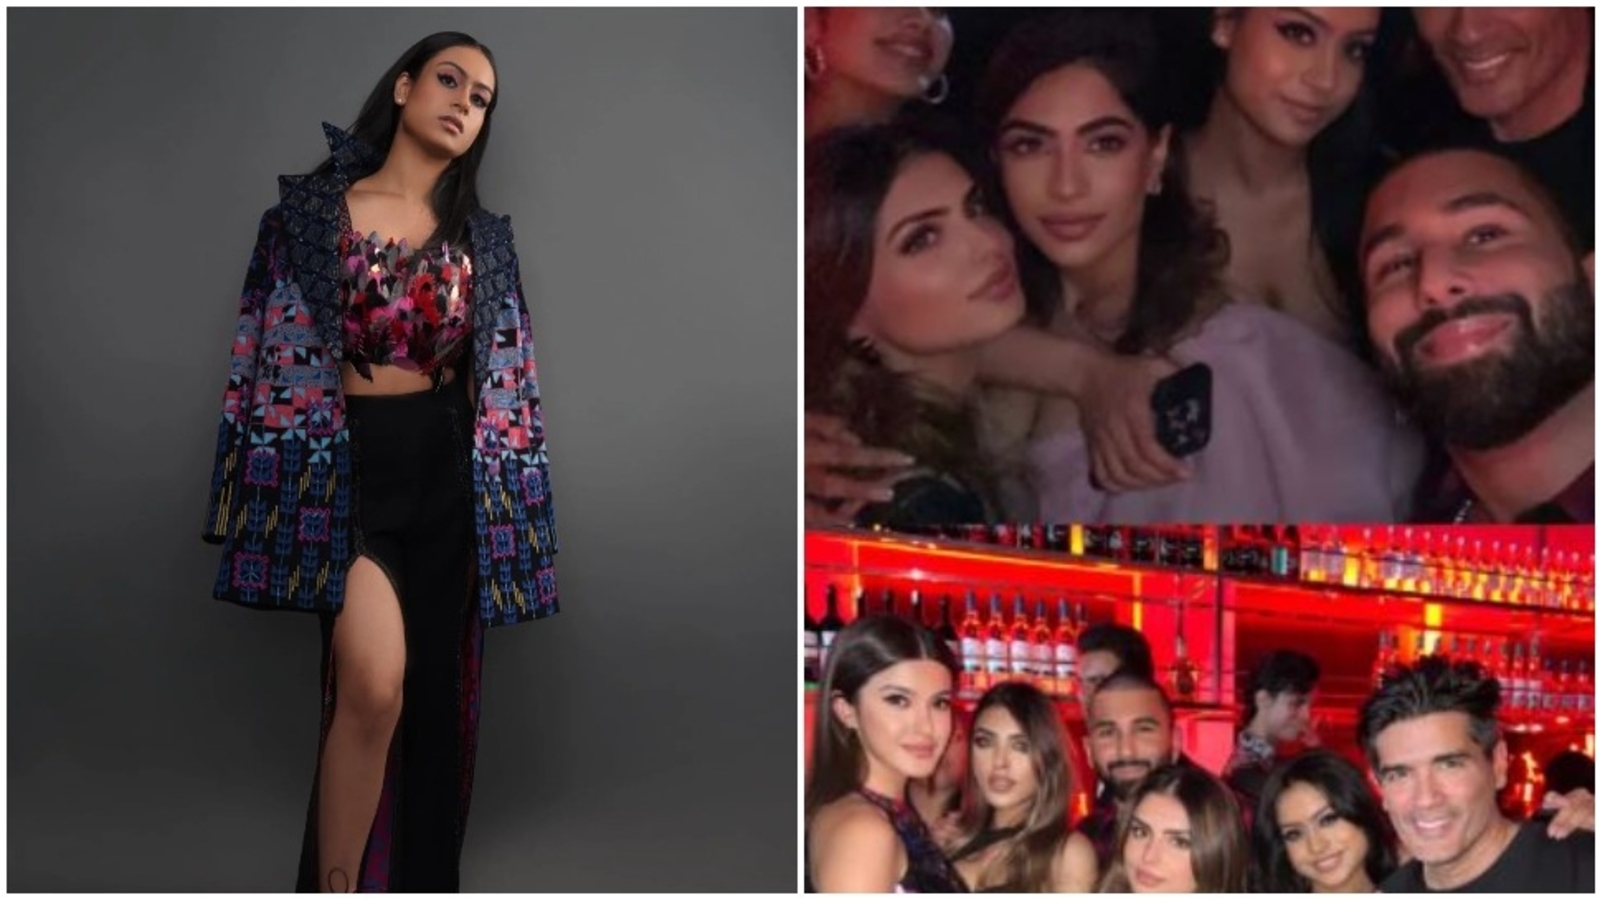 Kajol Devgan Live Sex Video - Nysa poses in high-slit outfit, fan says: 'She looks like her mom Kajol' |  Bollywood - Hindustan Times